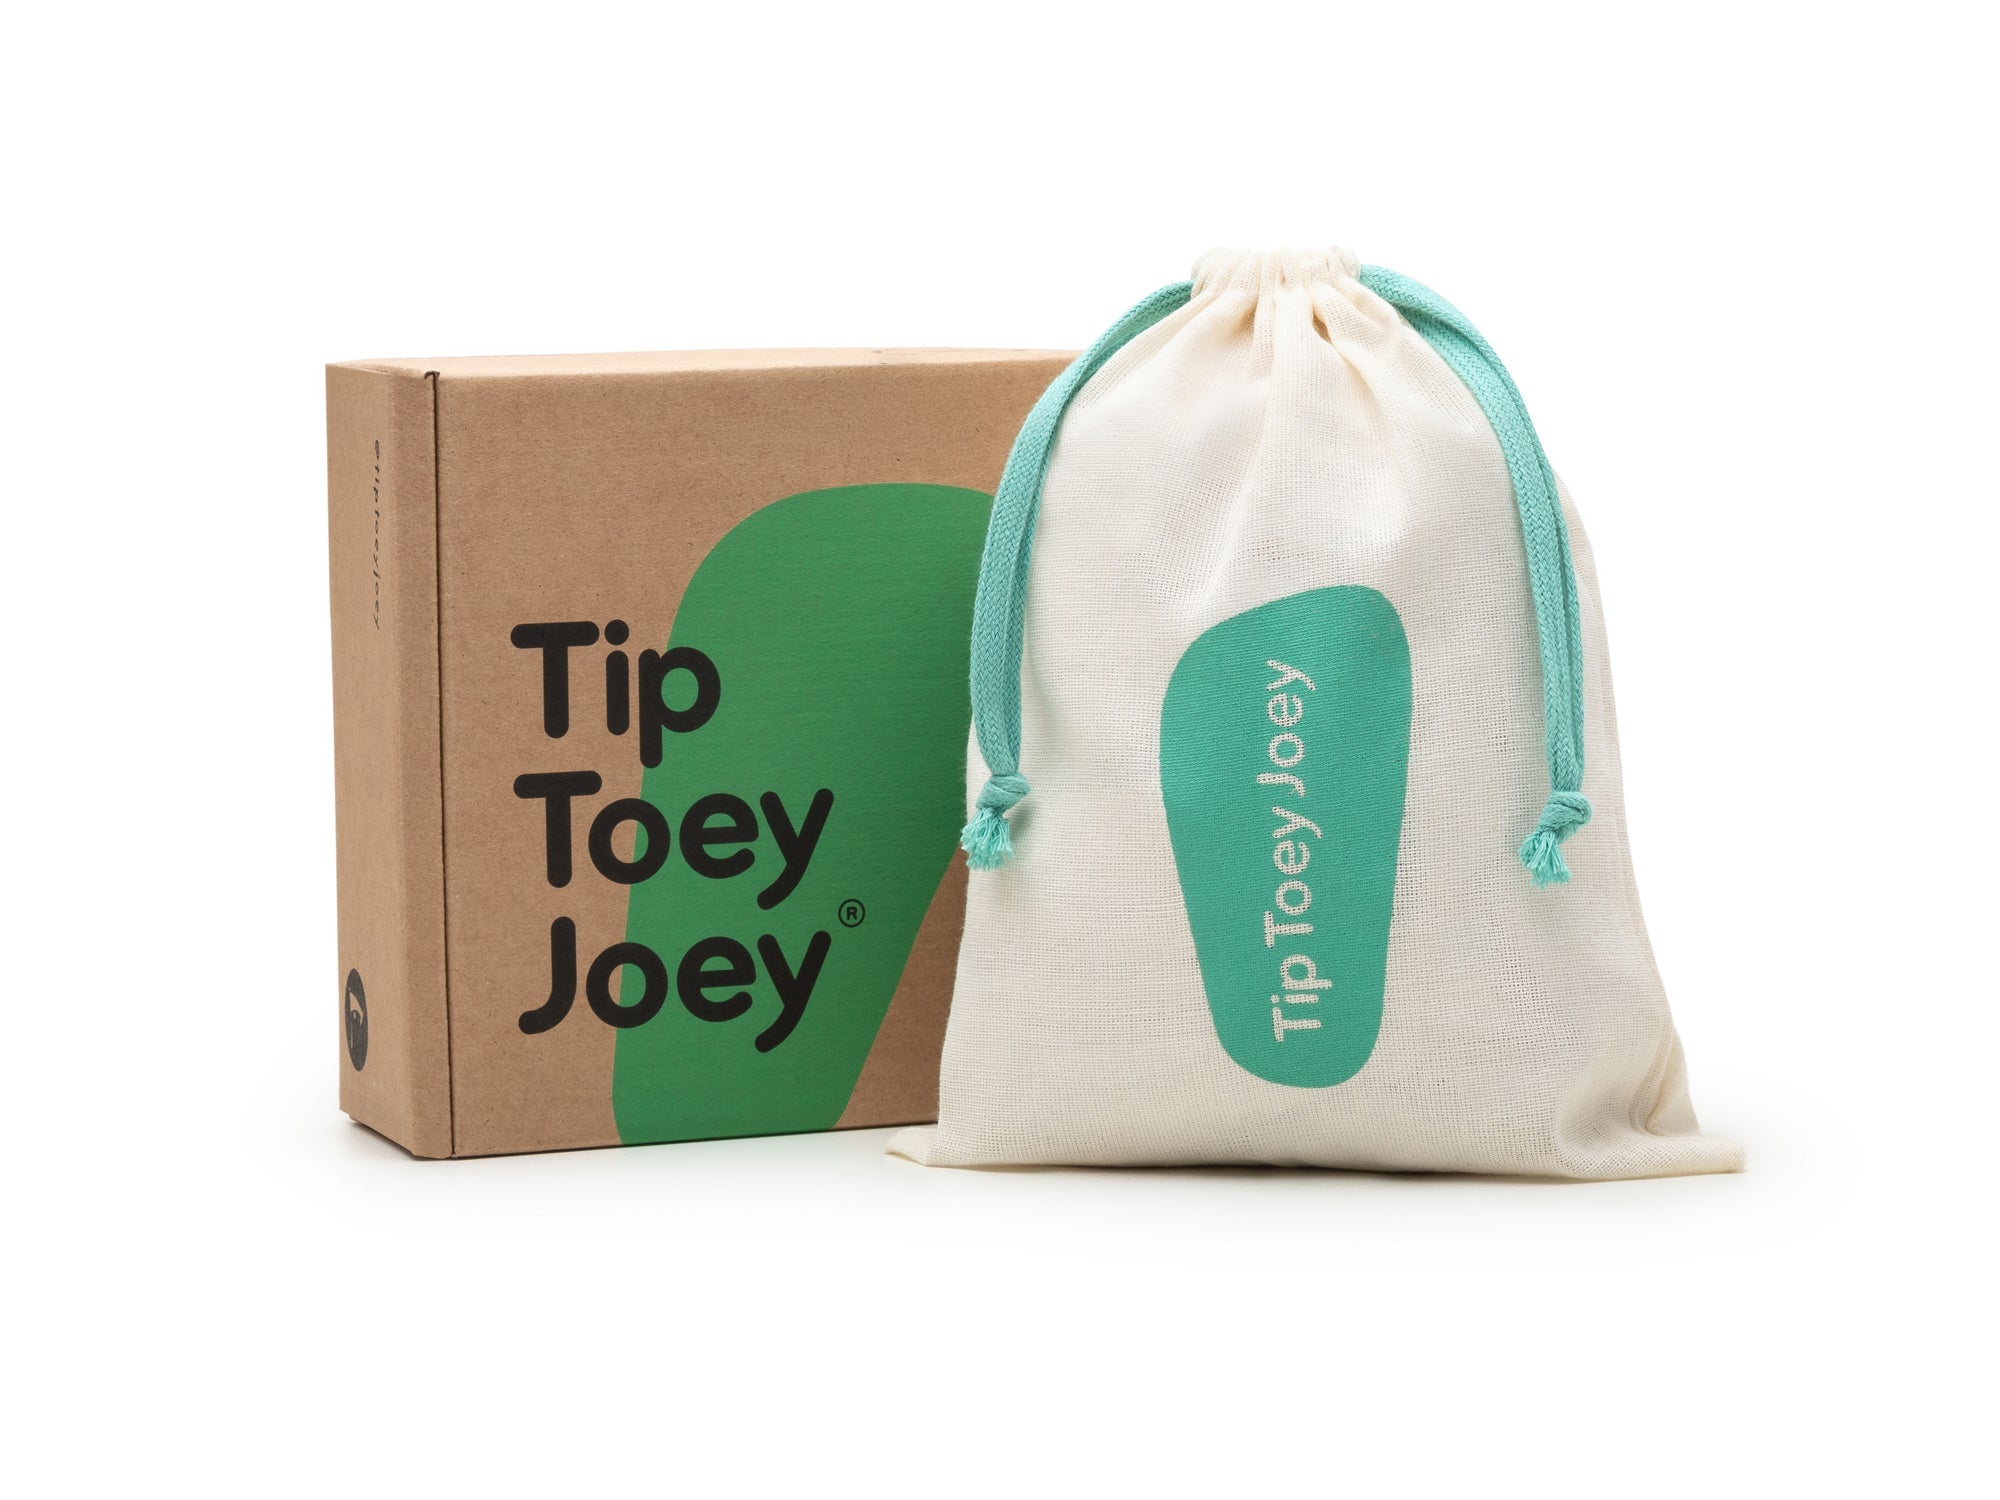 Sandálias Parky Papaya - Tip Toey Joey